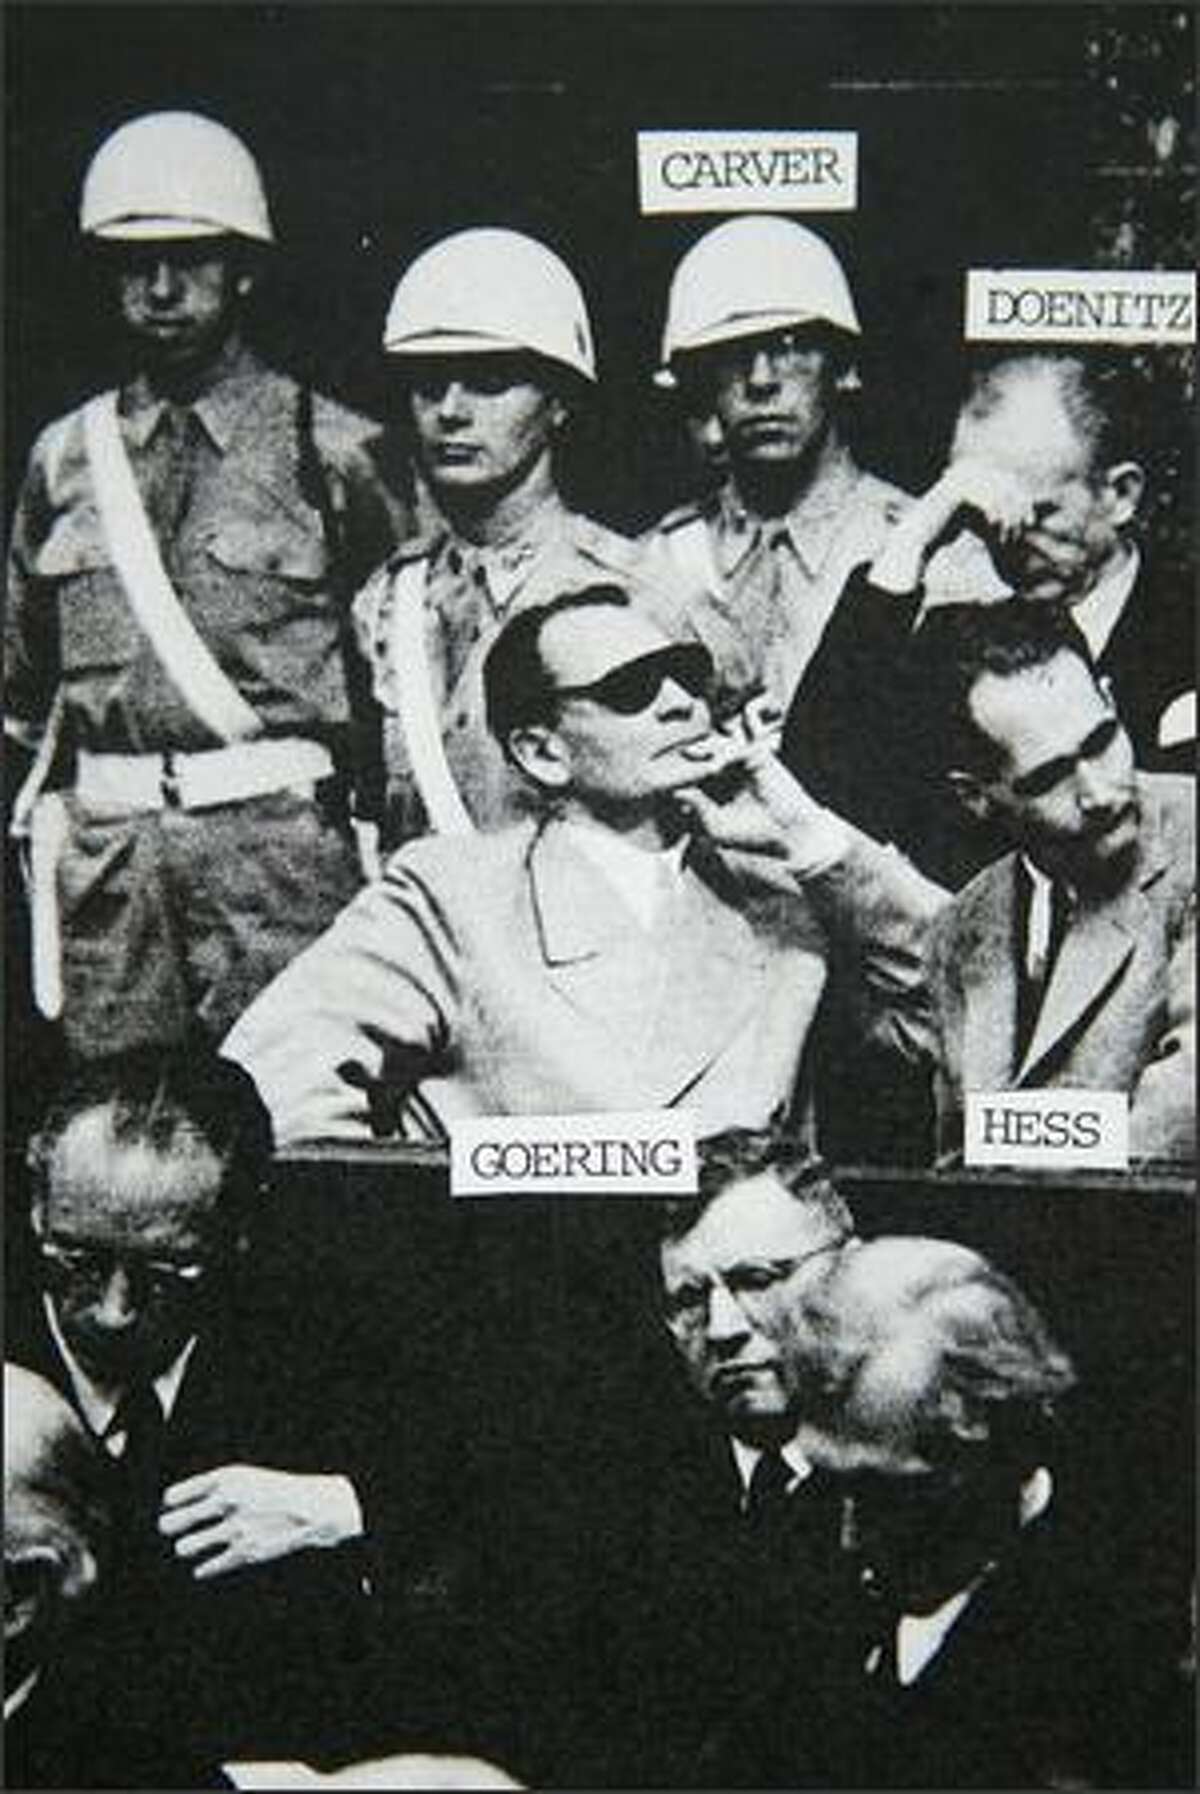 Jack Carver stands behind Hermann Goering during the Nazi's trial in postwar Nuremberg. (Photo courtesy of Jack Carver)